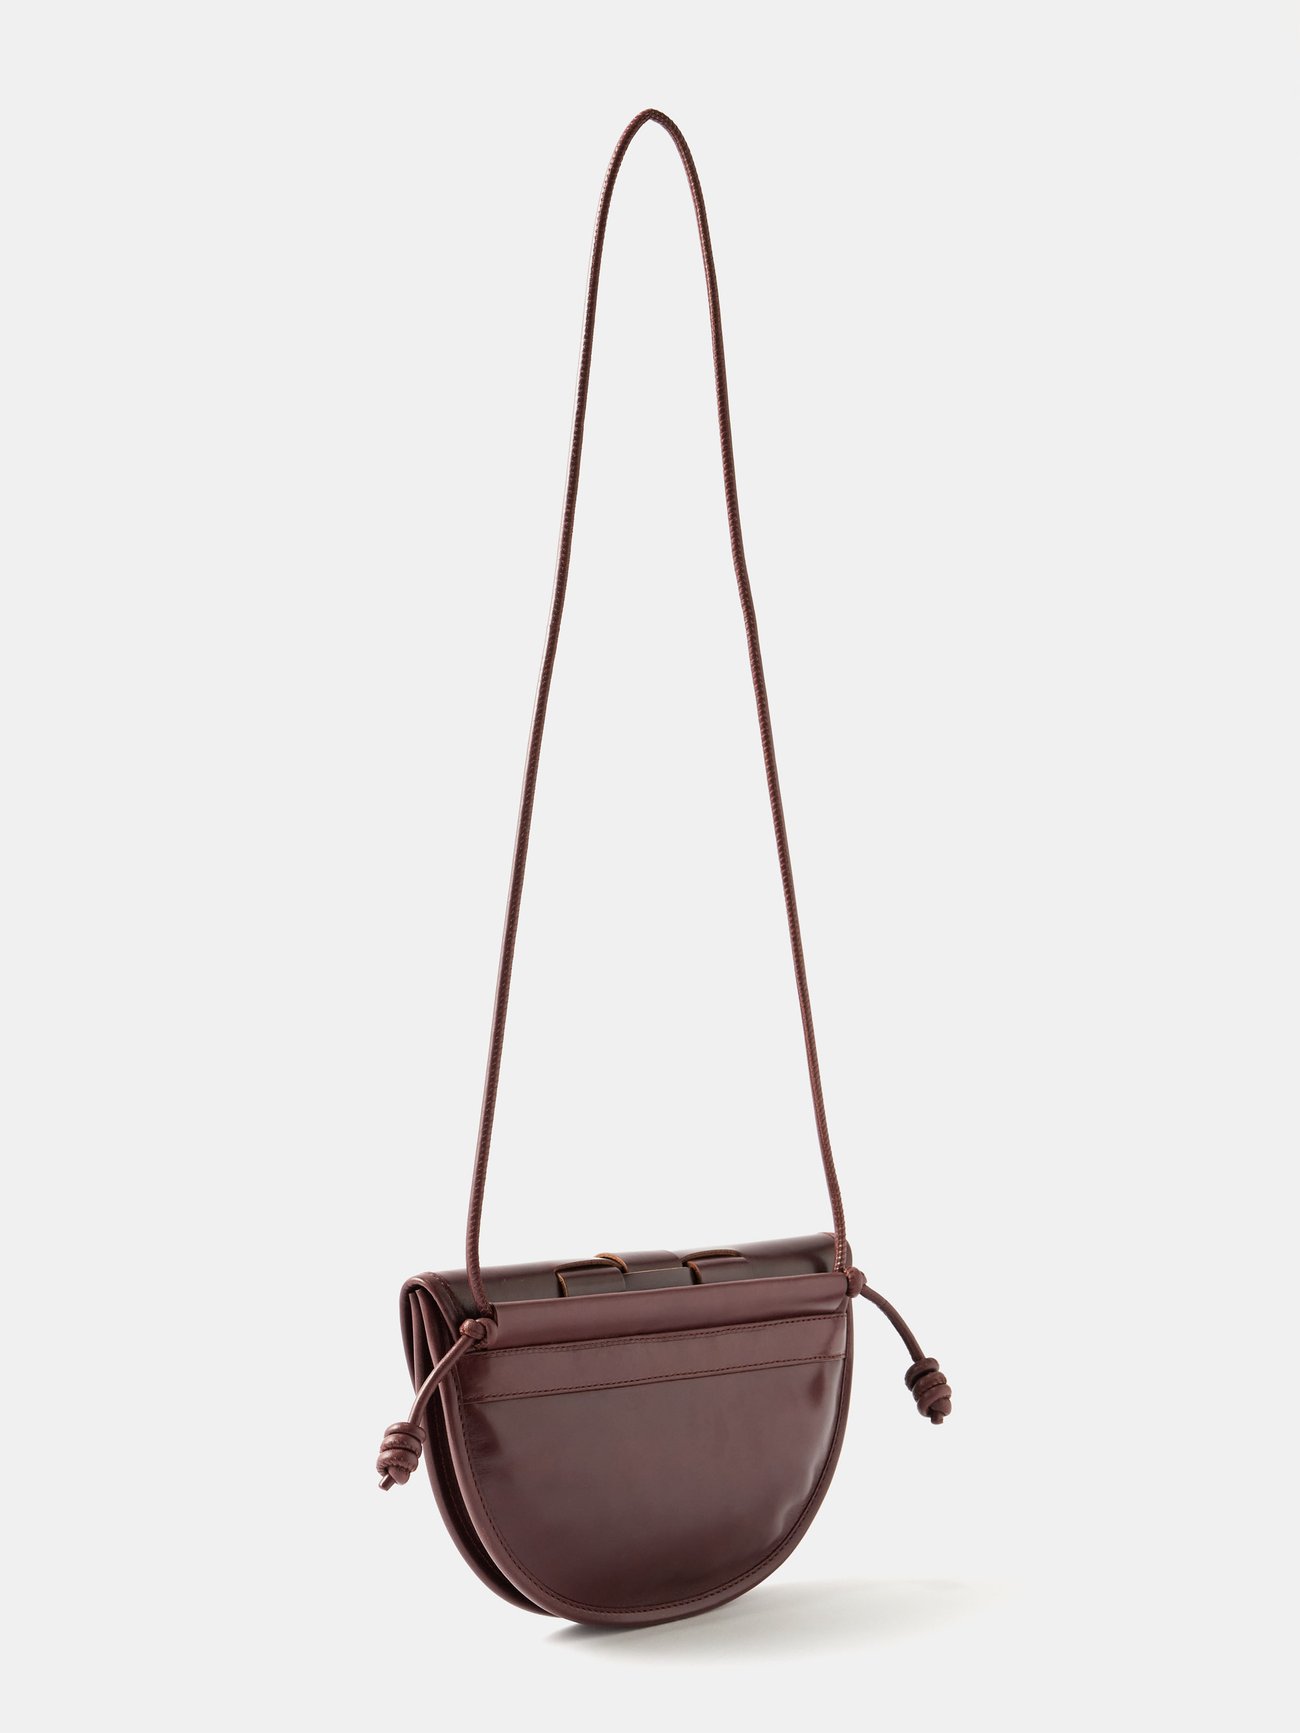 Shop HEREU 2WAY Leather Crossbody Handbags (1523927) by Phalaenopsis